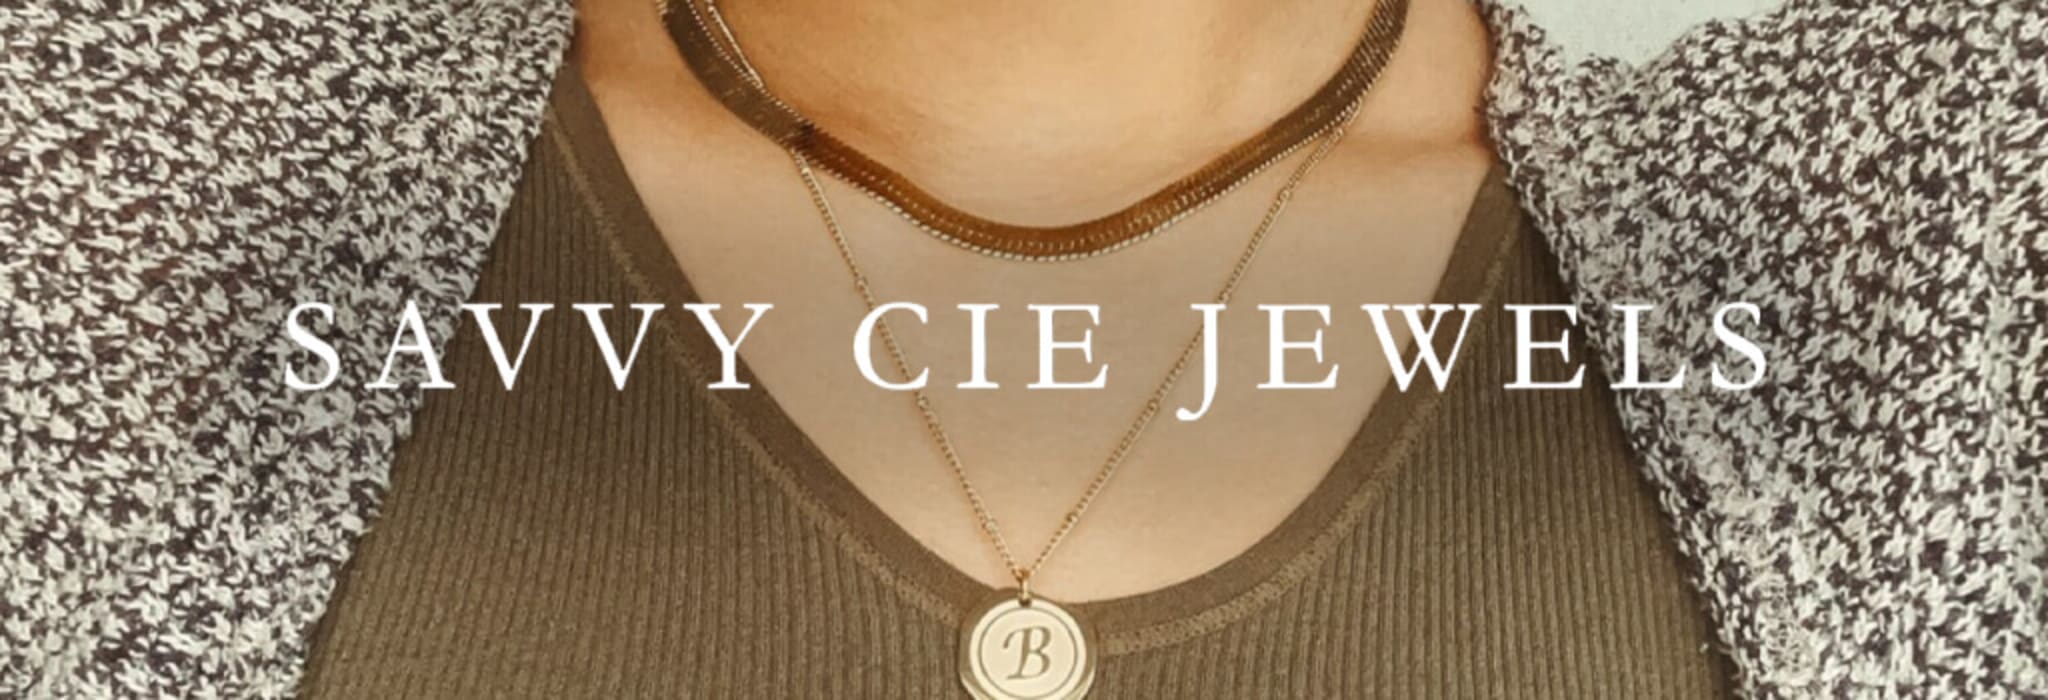 Savvy Cie Jewels Italian Vermeil Coin Charm Necklace